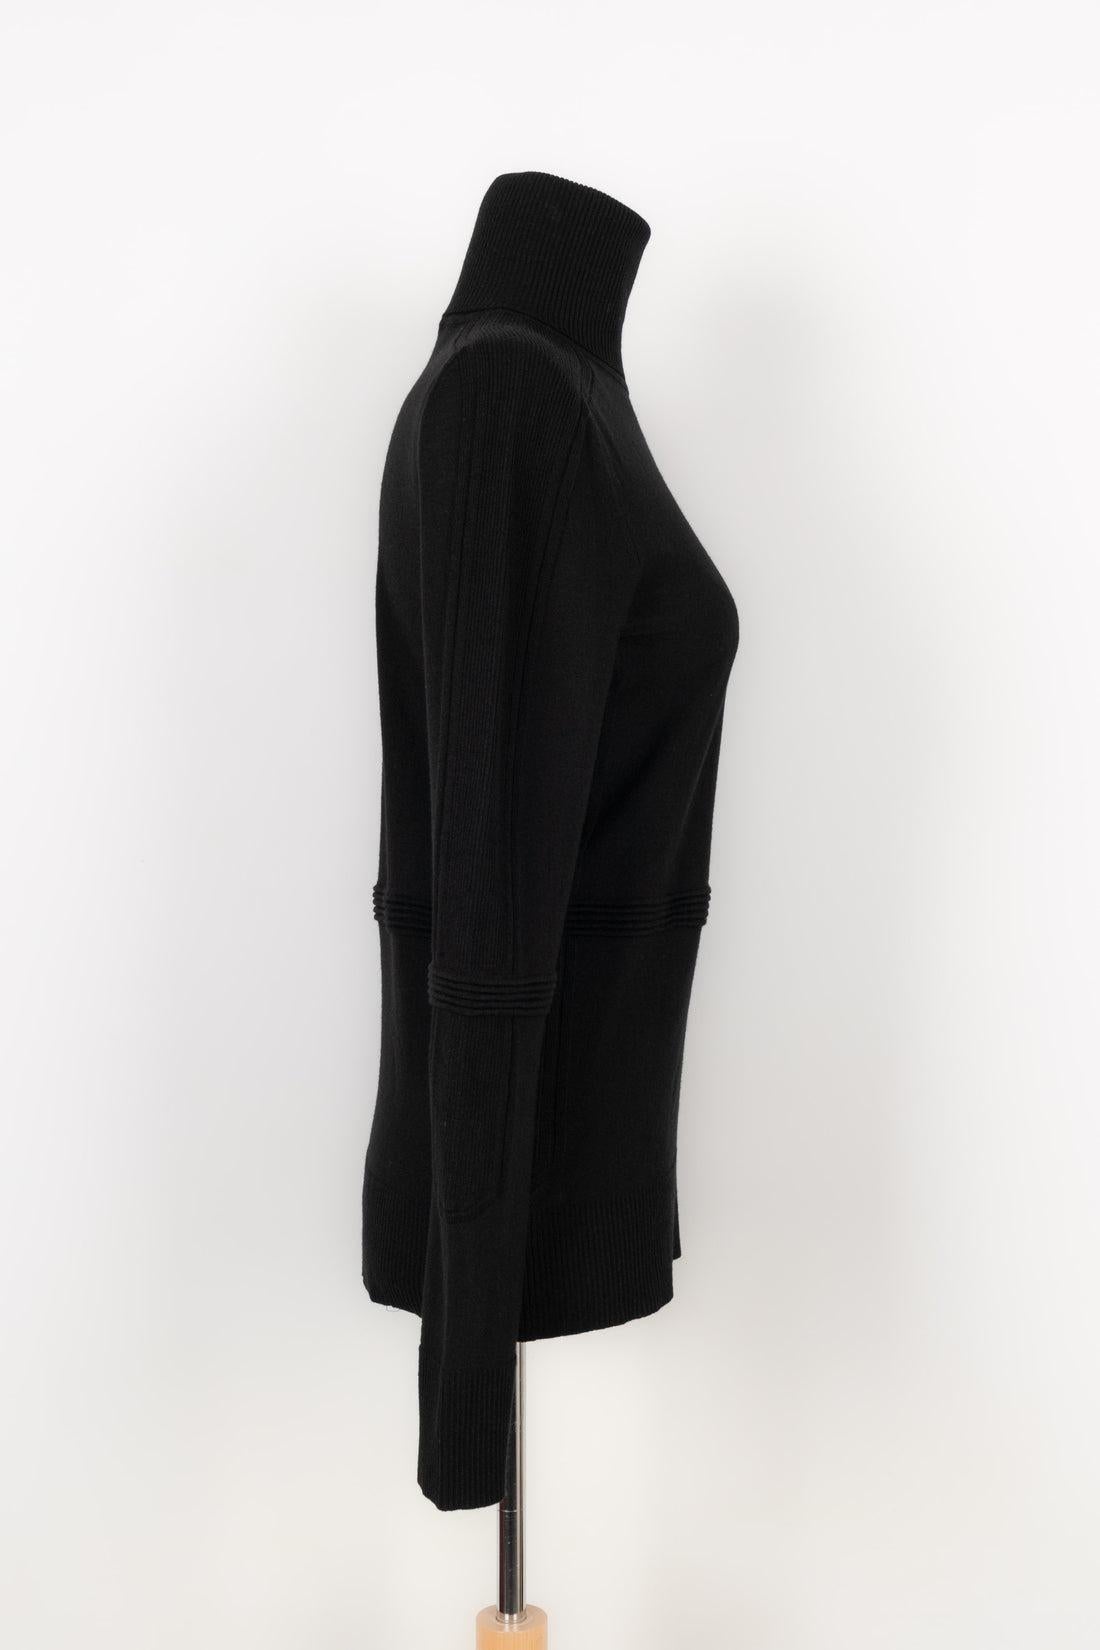 Chanel Black Pullover in Black Wool Turtleneck  In Excellent Condition For Sale In SAINT-OUEN-SUR-SEINE, FR